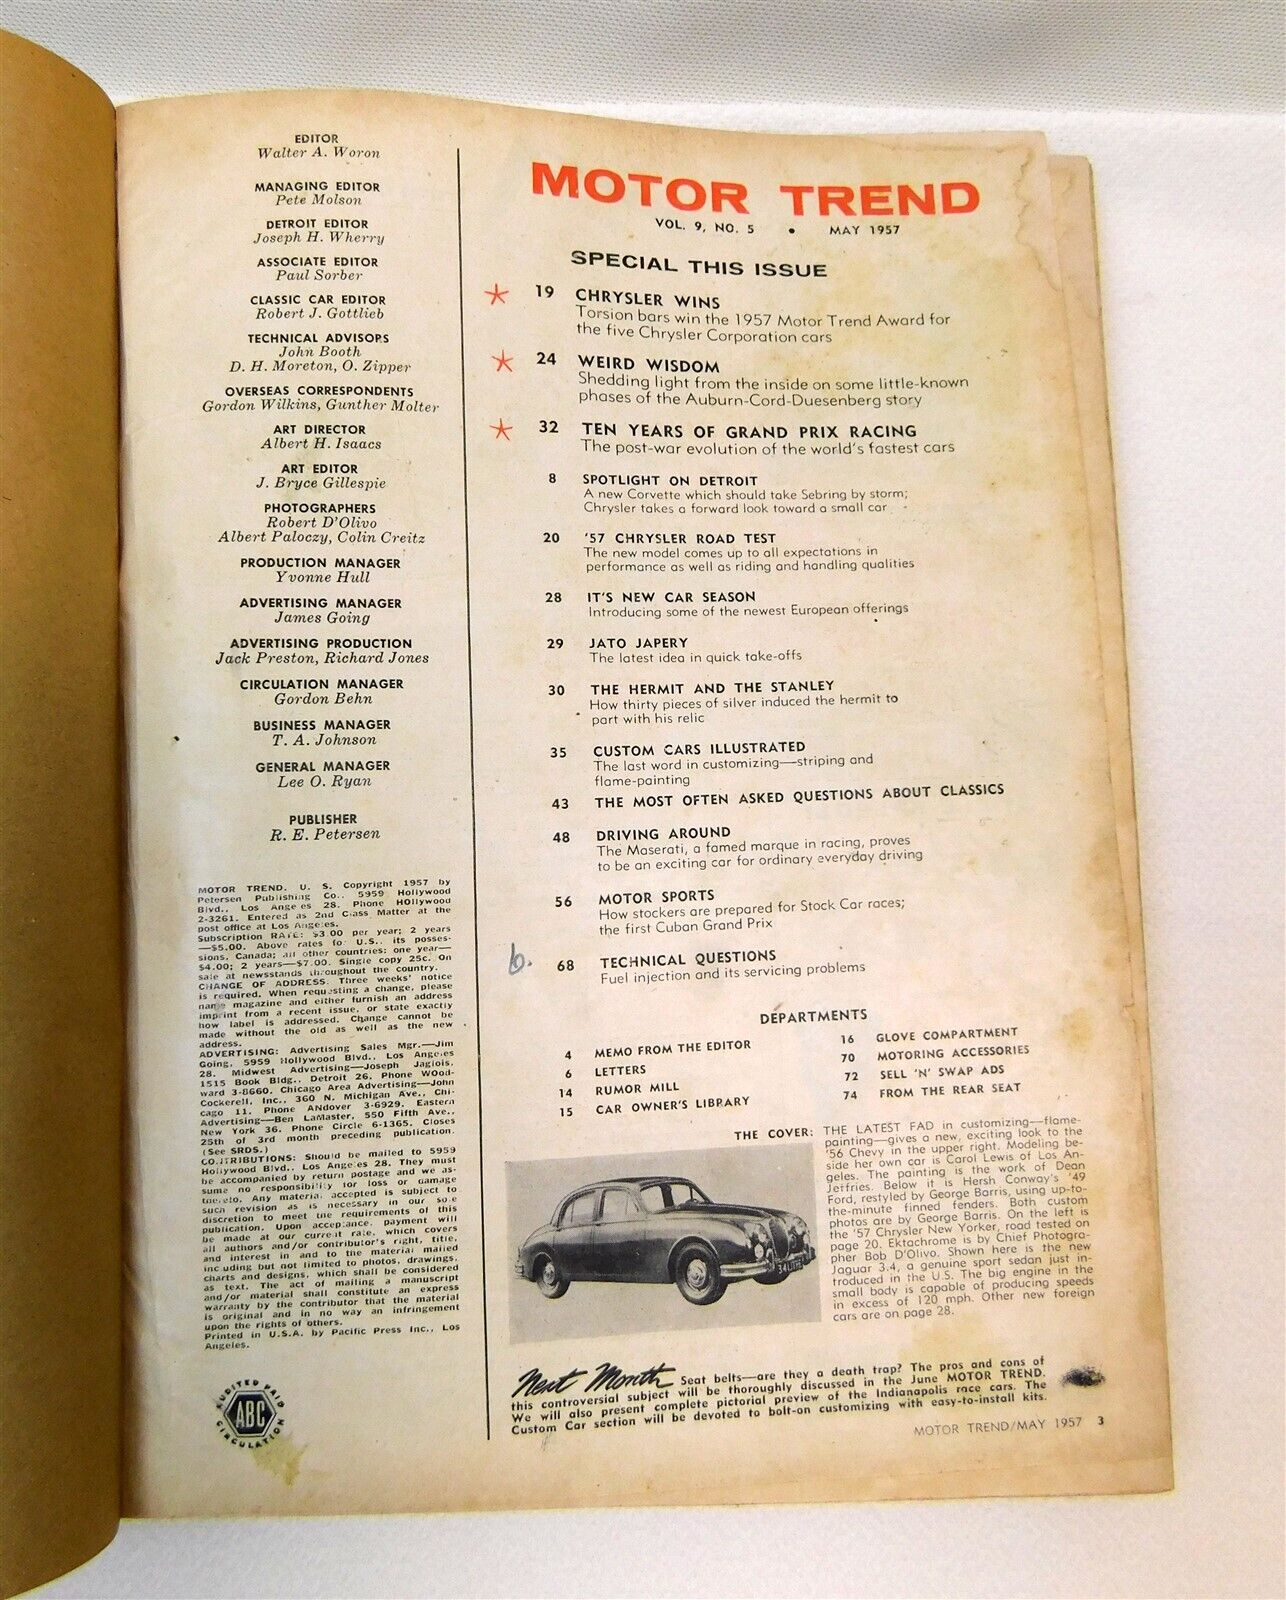 Vintage May - Nov 1957 Motor Trend Magazine Hardcover Bound Vol 9 No 5 - 11